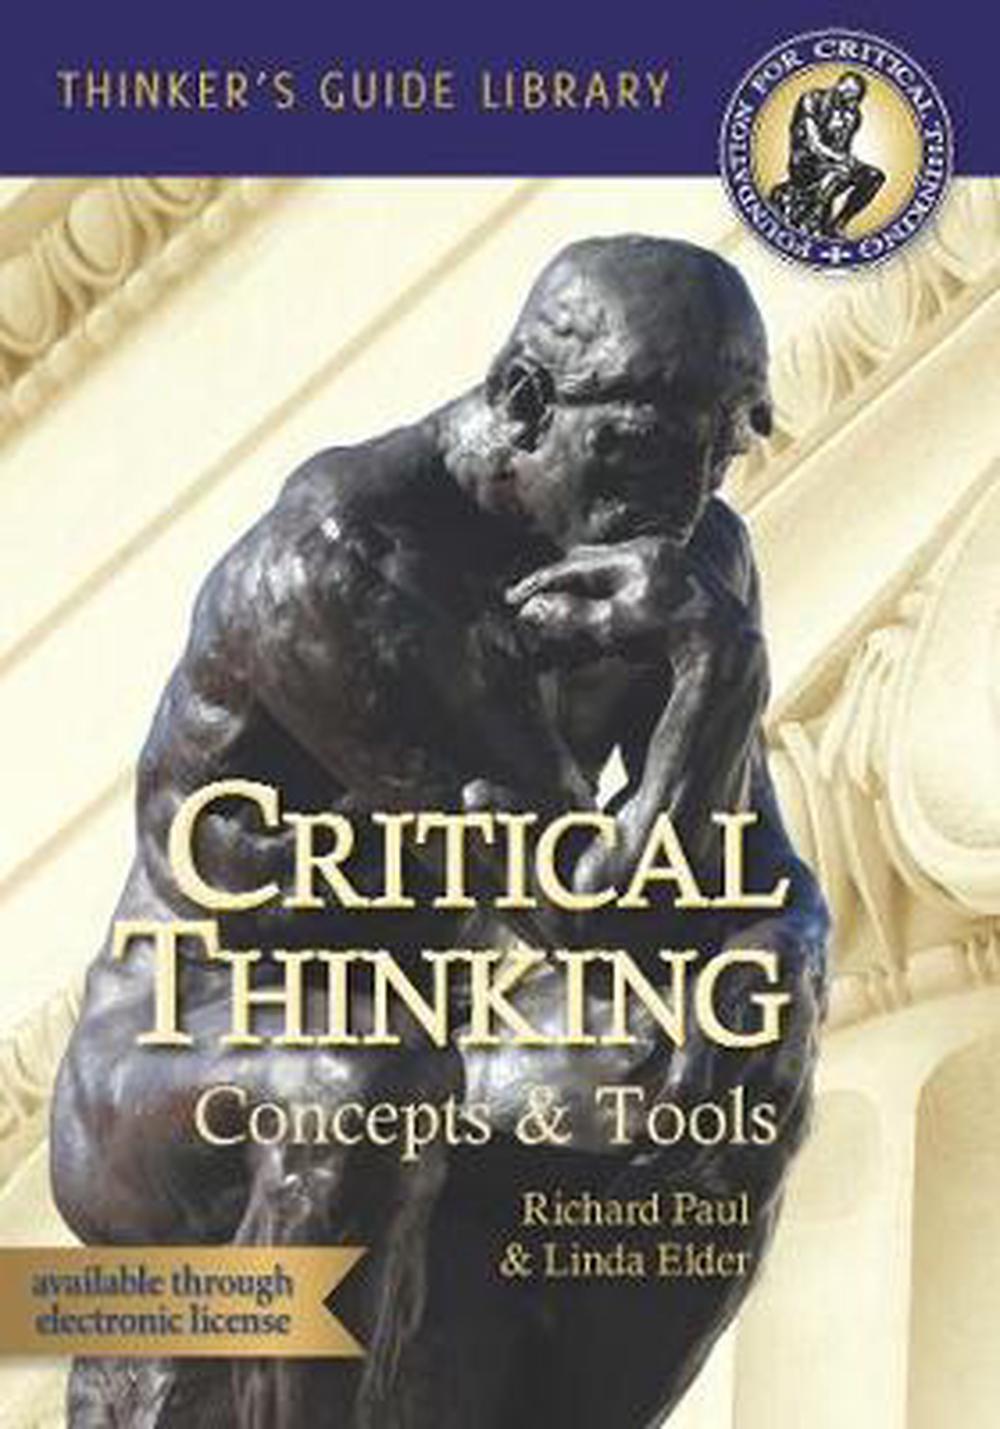 critical thinking book amazon